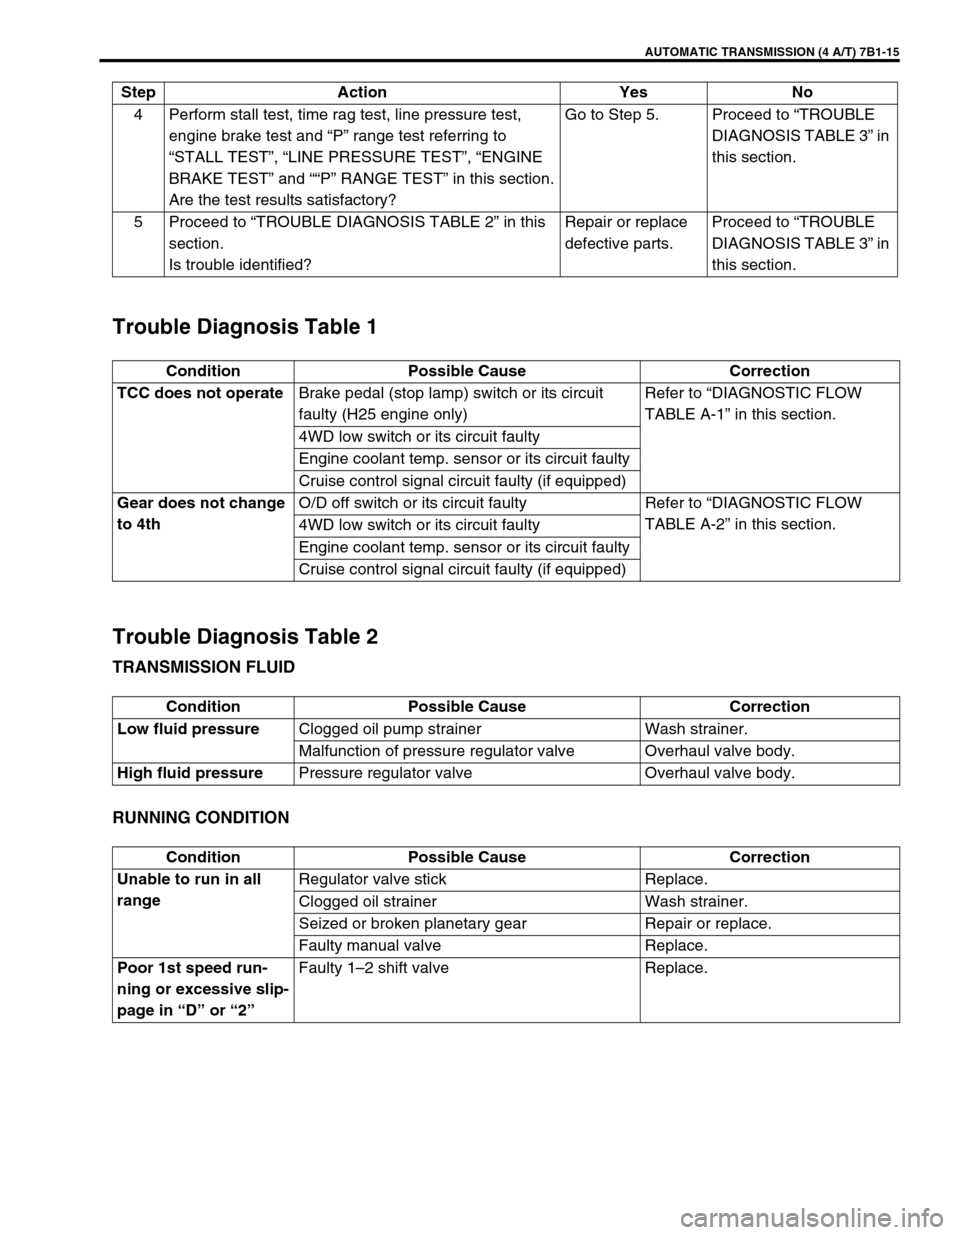 SUZUKI GRAND VITARA 1999 2.G User Guide AUTOMATIC TRANSMISSION (4 A/T) 7B1-15
Trouble Diagnosis Table 1
Trouble Diagnosis Table 2
TRANSMISSION FLUID
RUNNING CONDITION
4 Perform stall test, time rag test, line pressure test, 
engine brake te